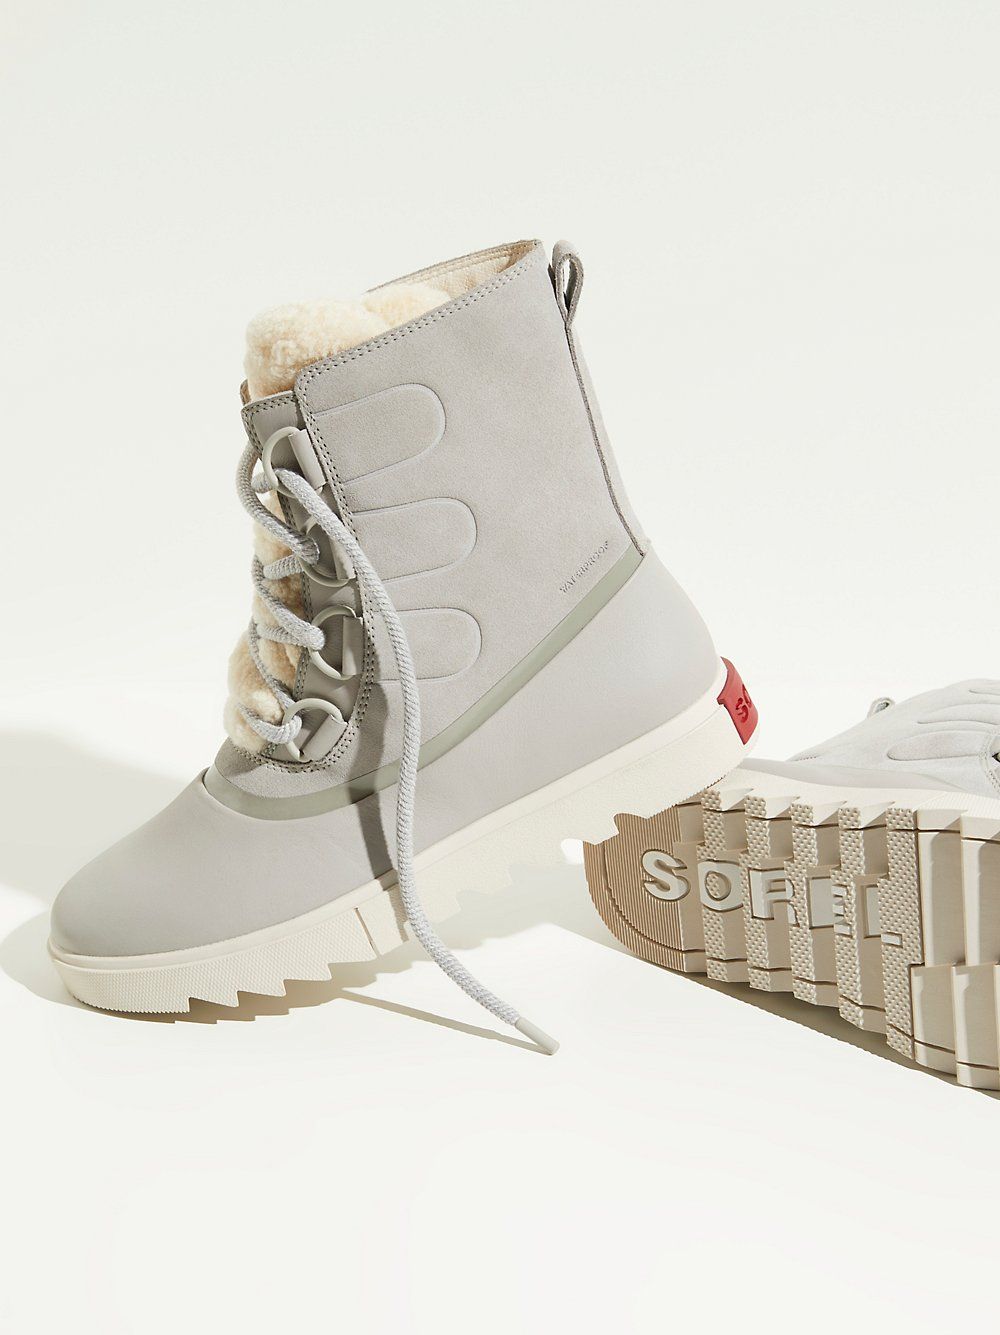 22 Best Snow Boots for Women | Warm 